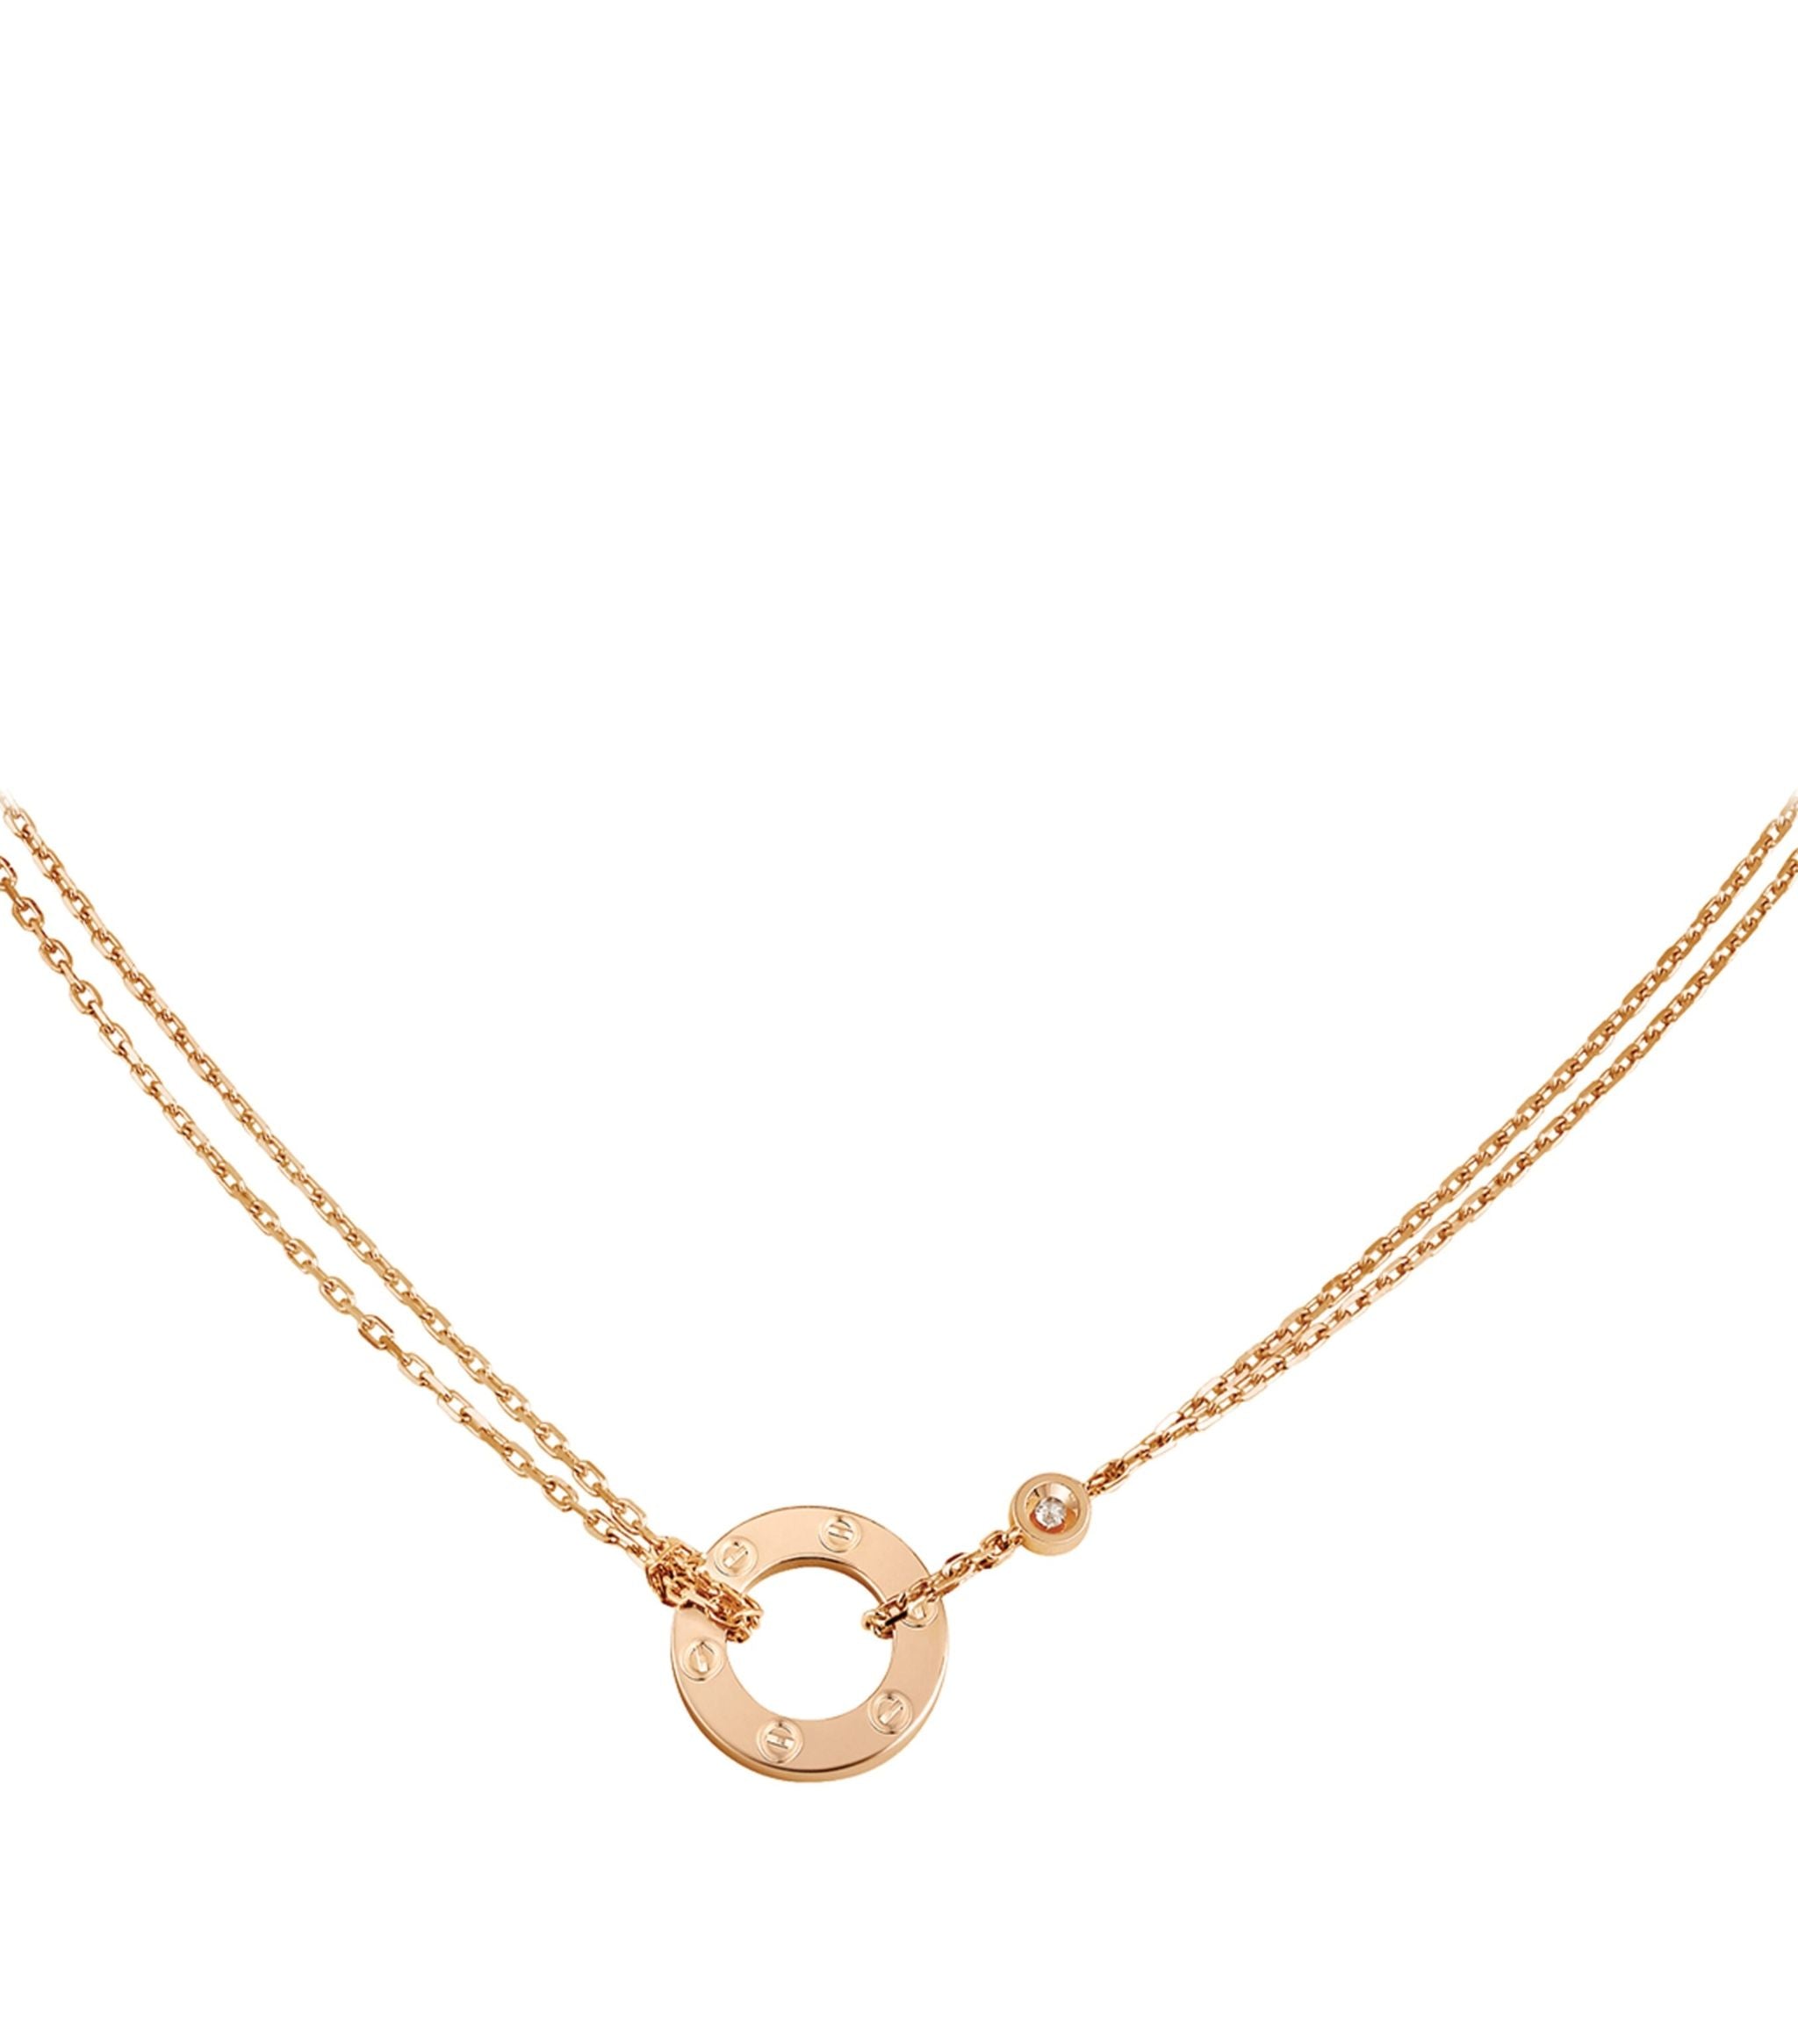 CRB7224509 - LOVE necklace, 2 diamonds - Rose gold, diamonds - Cartier